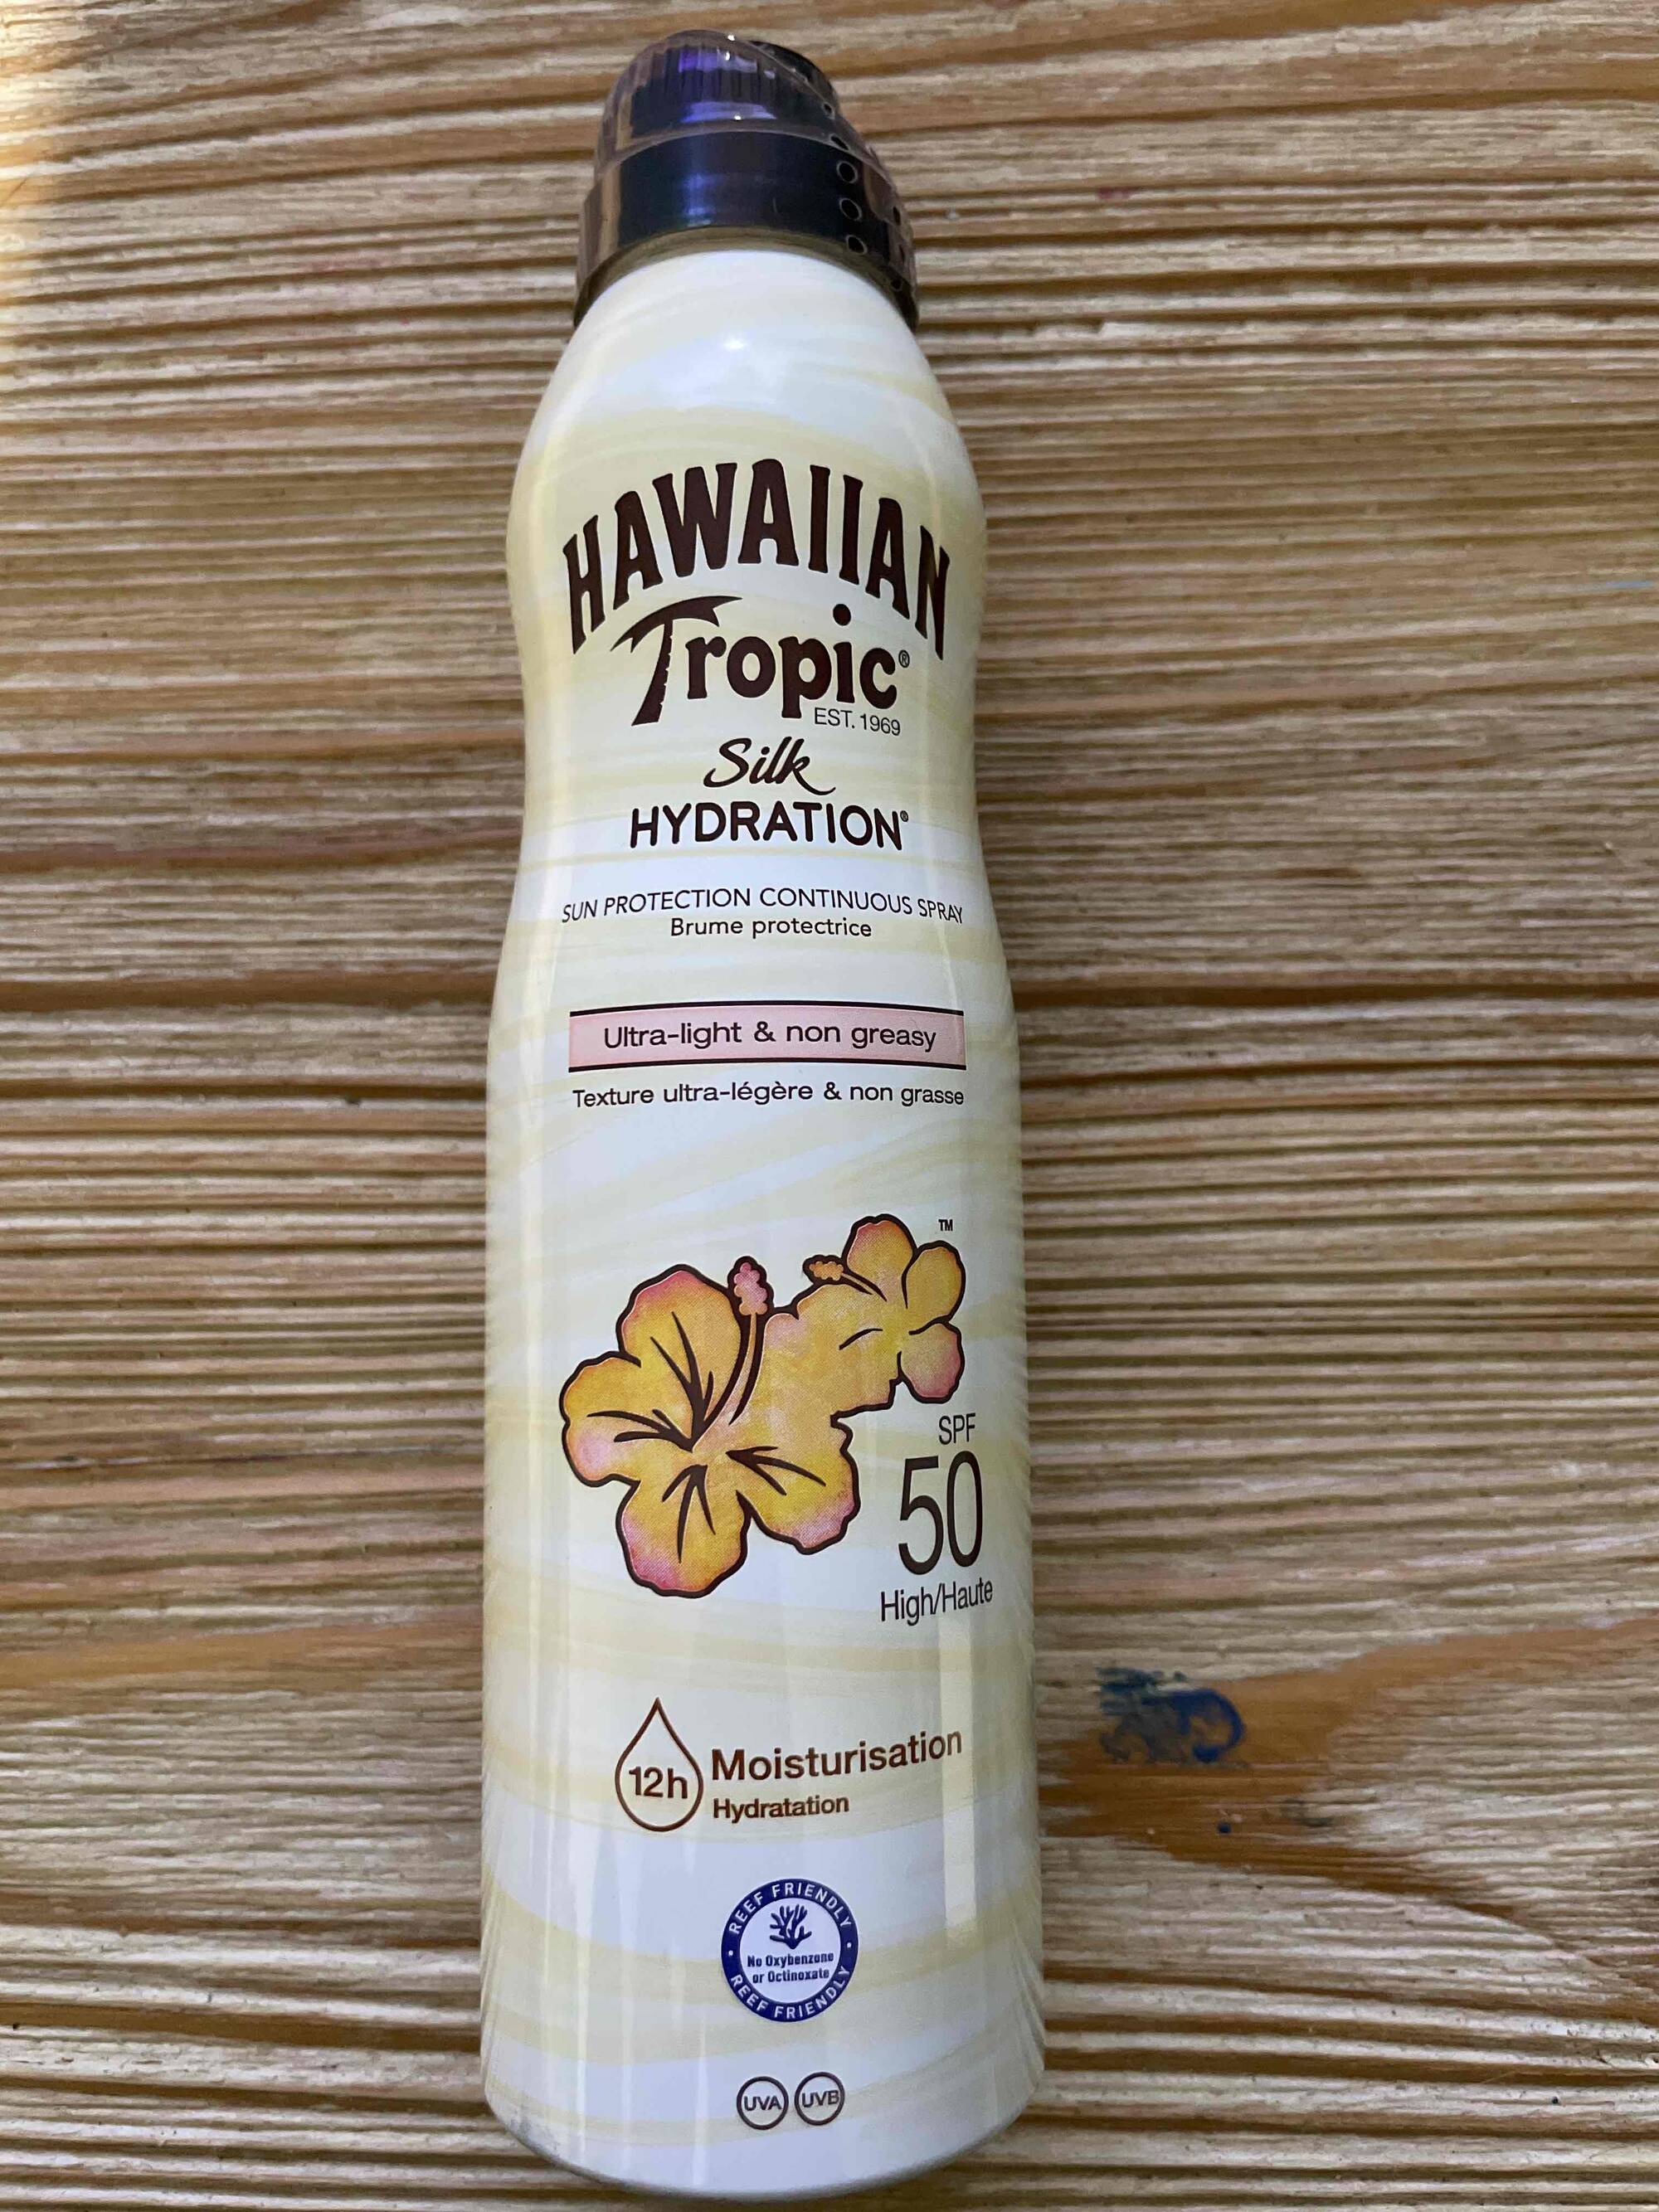 HAWAIIAN TROPIC - Silk hydration - Brume protectrice spf50